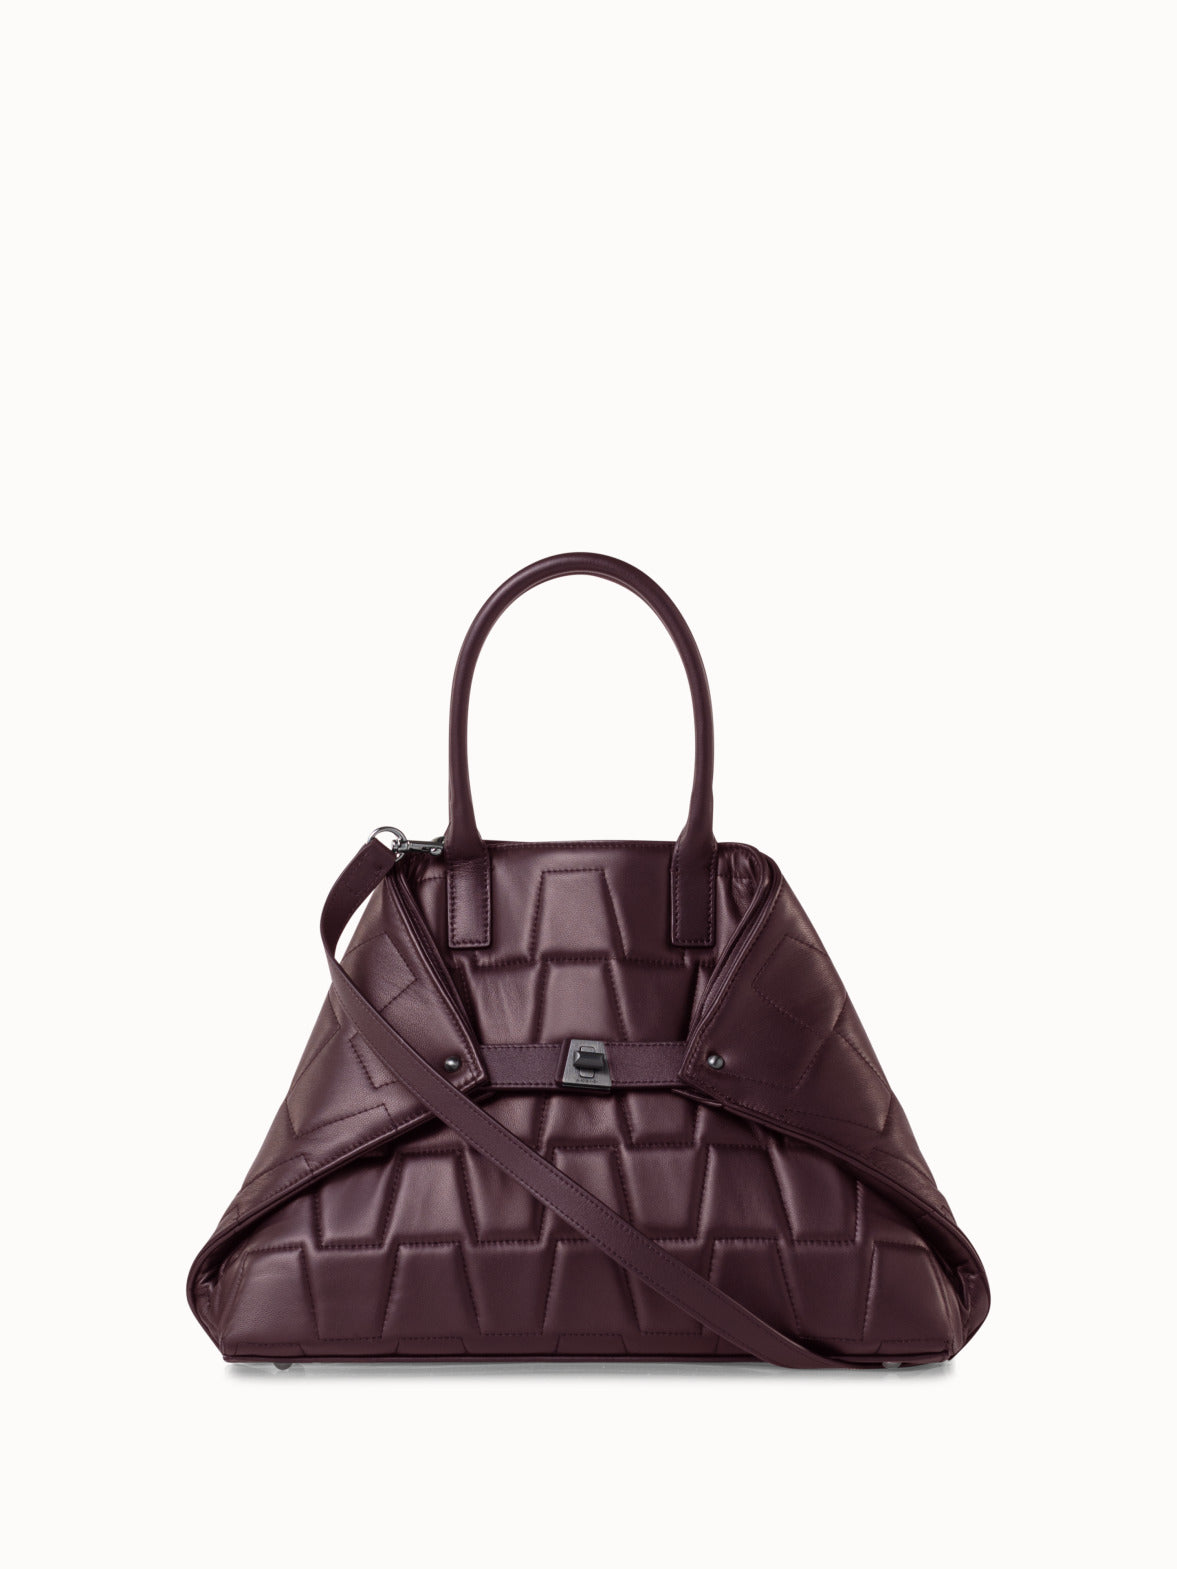 Trapezoid-Shaped Handbags - Purse Trends